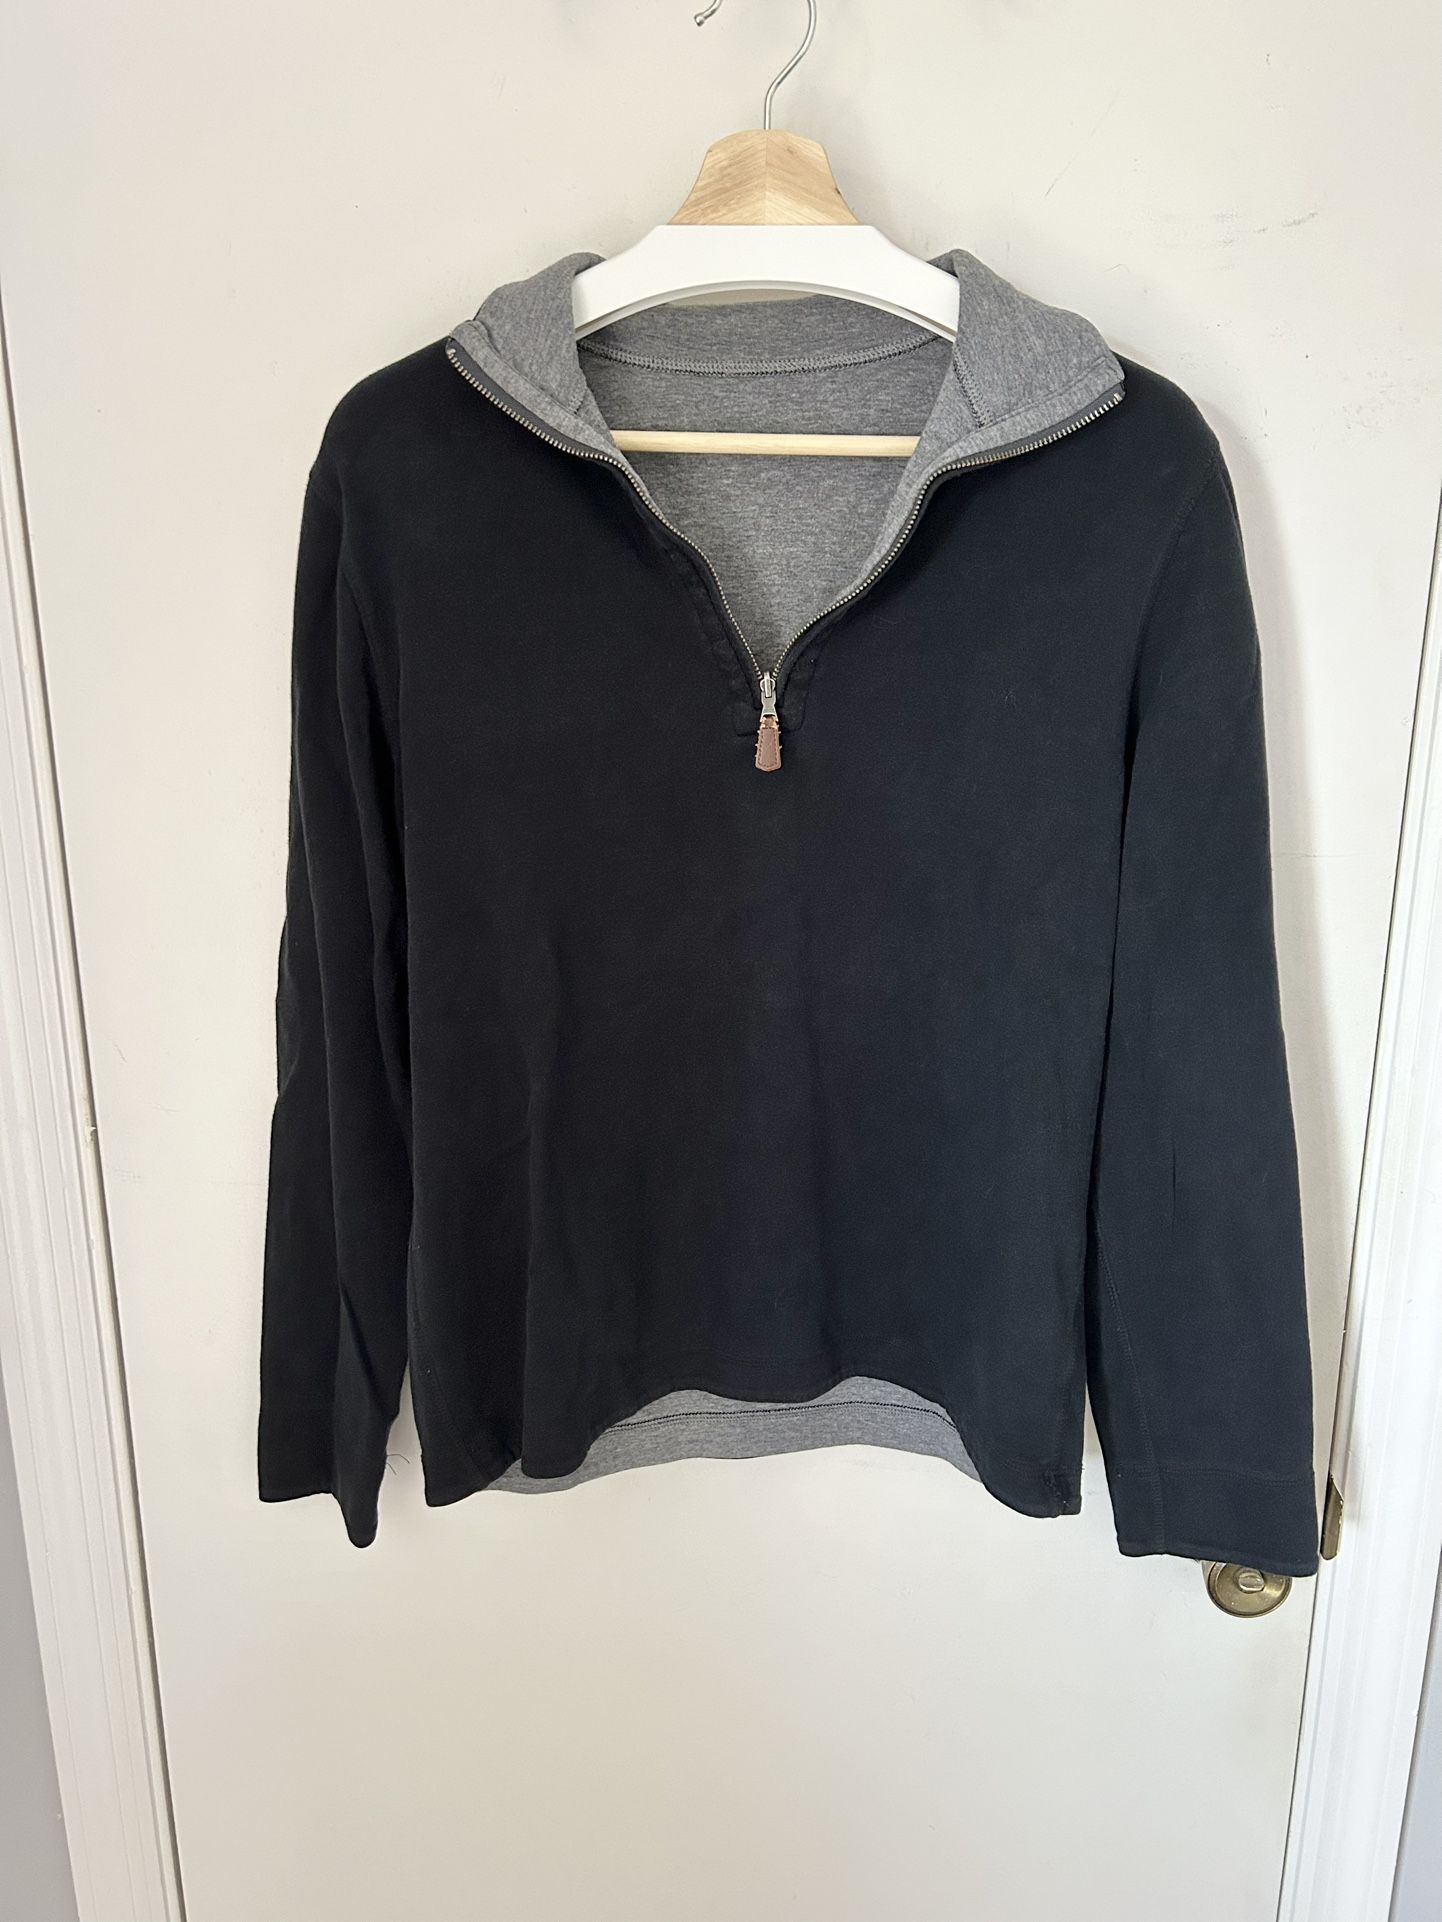 Banana Republic reversible black and gray quarter zip sweater, size medium